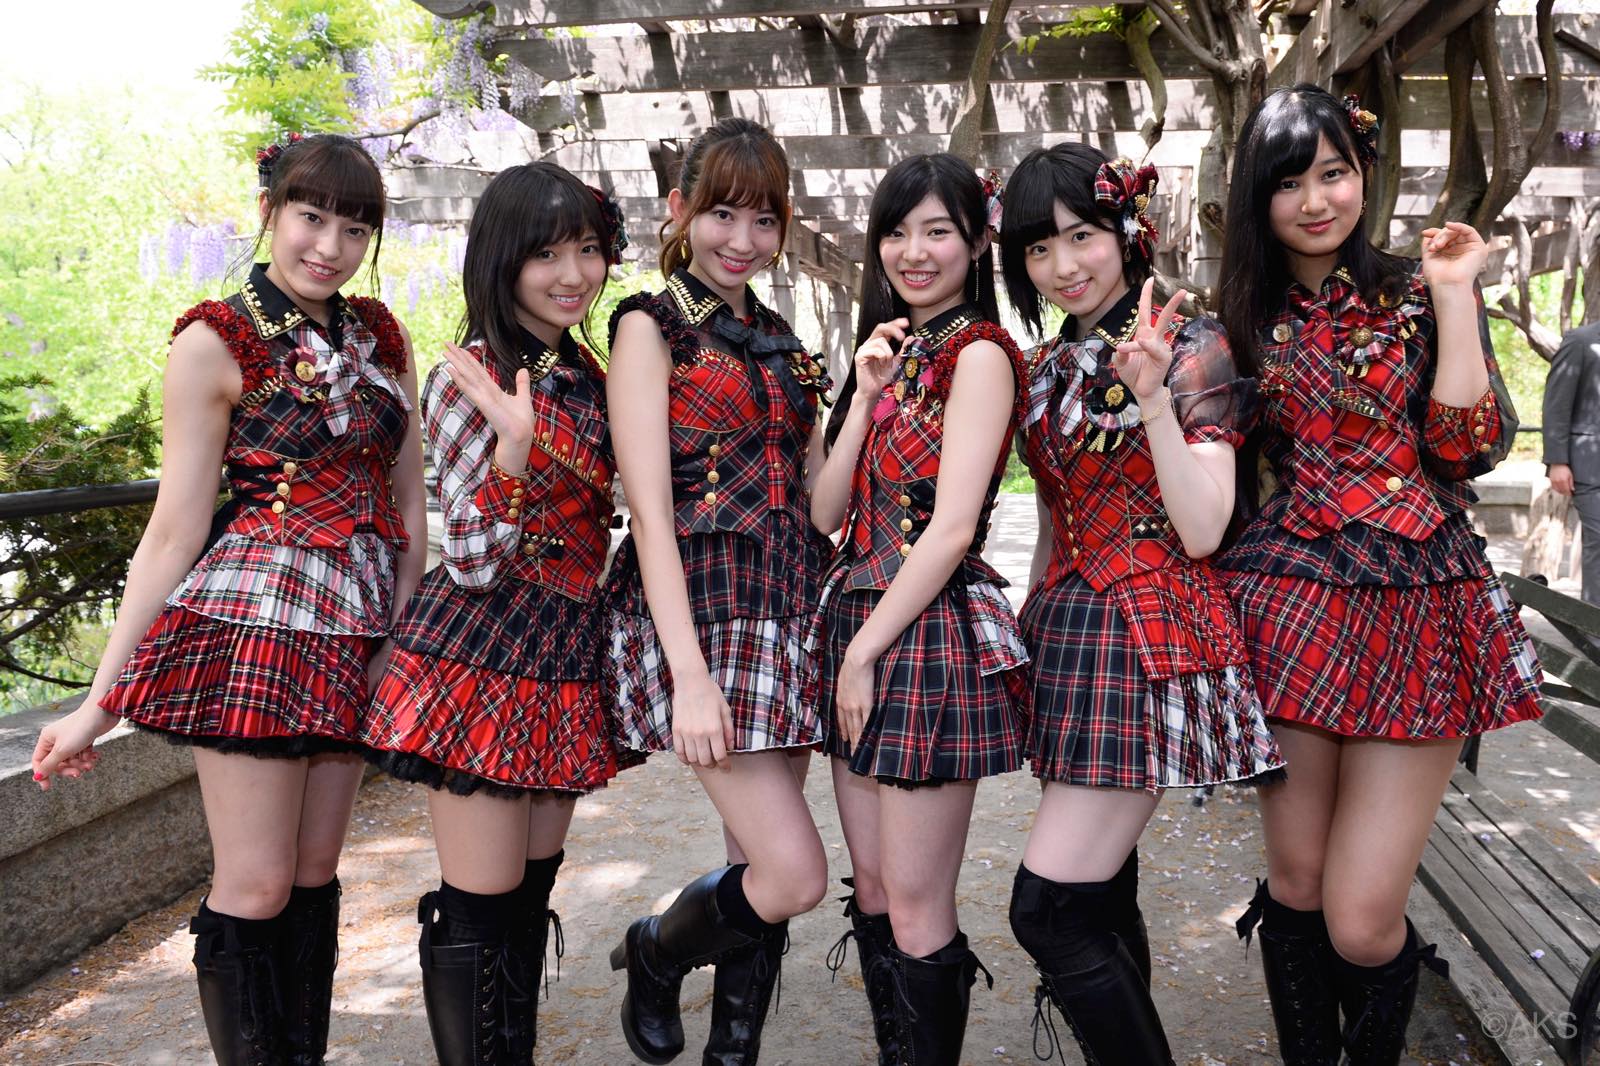 [Photo] AKB48 Take Manhattan (Again)! Japan Day Central Park 2015